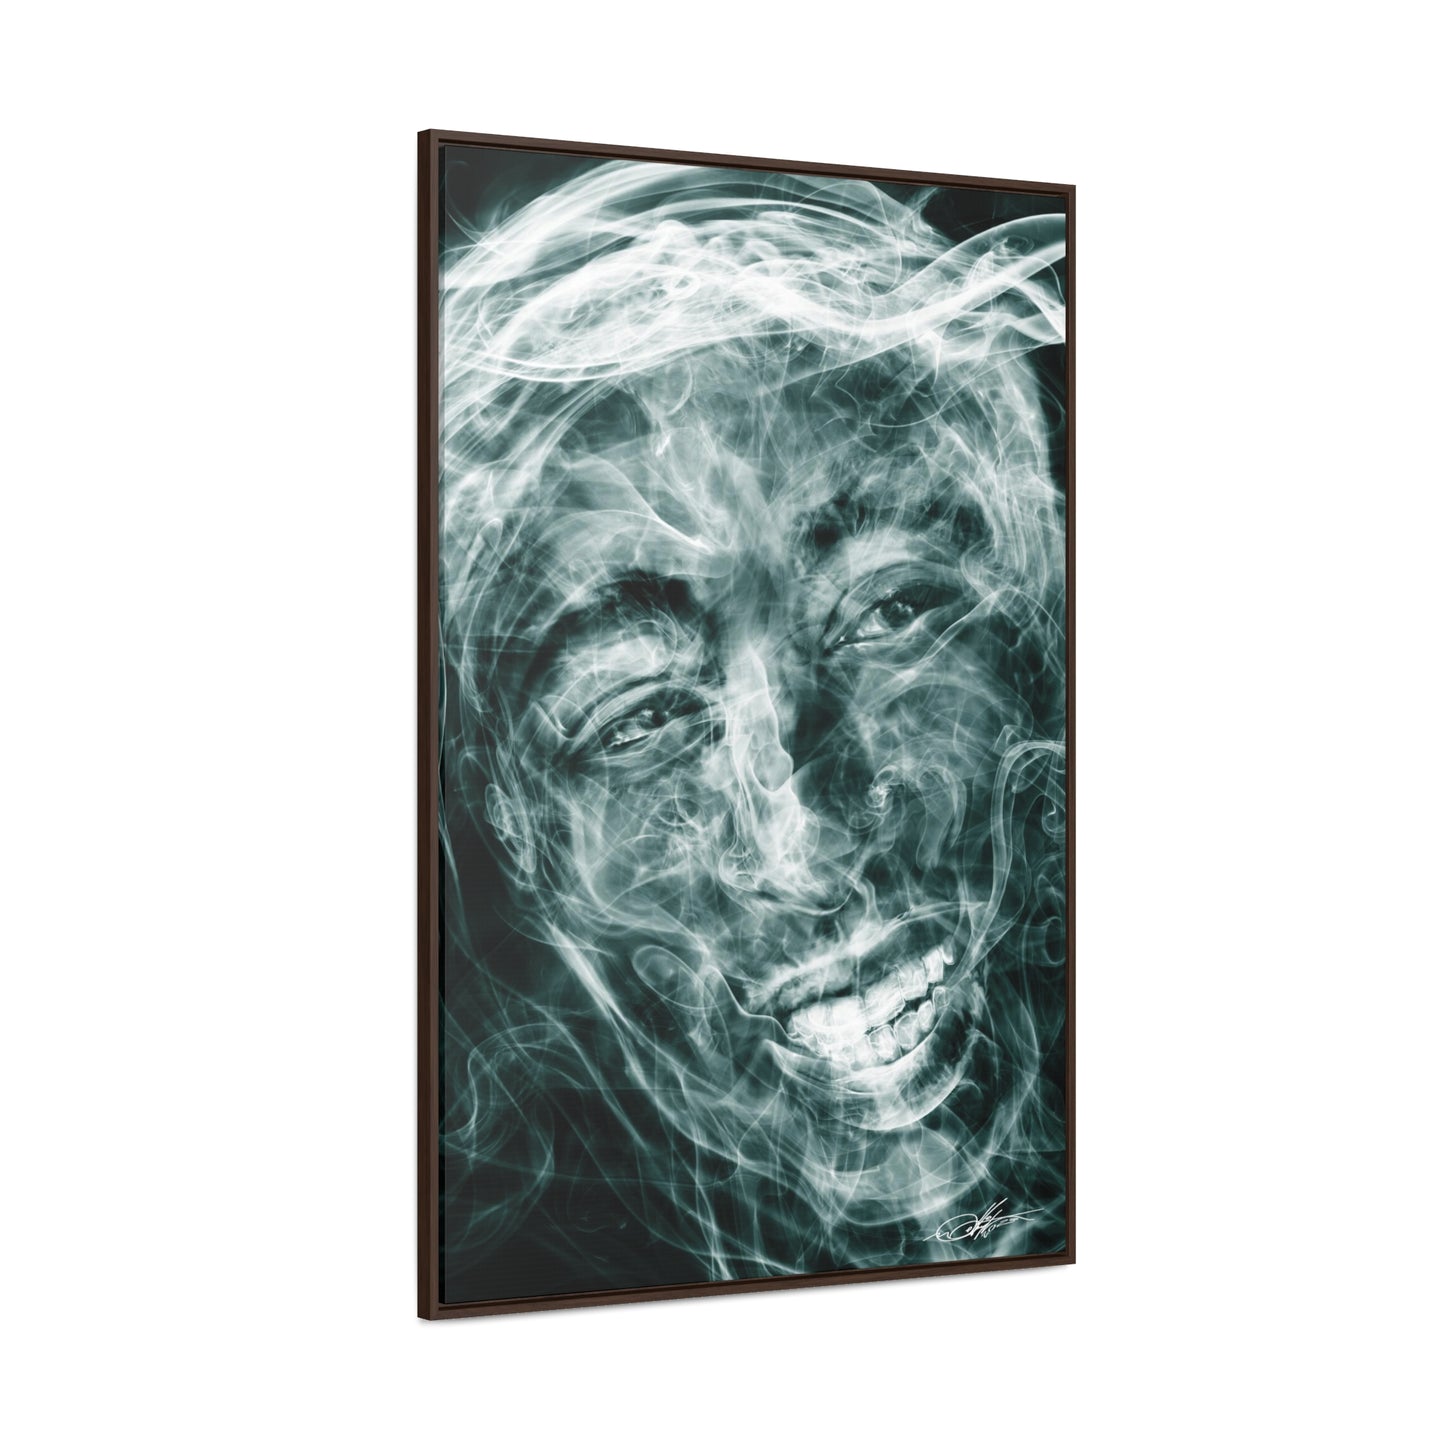 Smoking Legends PAC-1 Framed Canvas Wrap